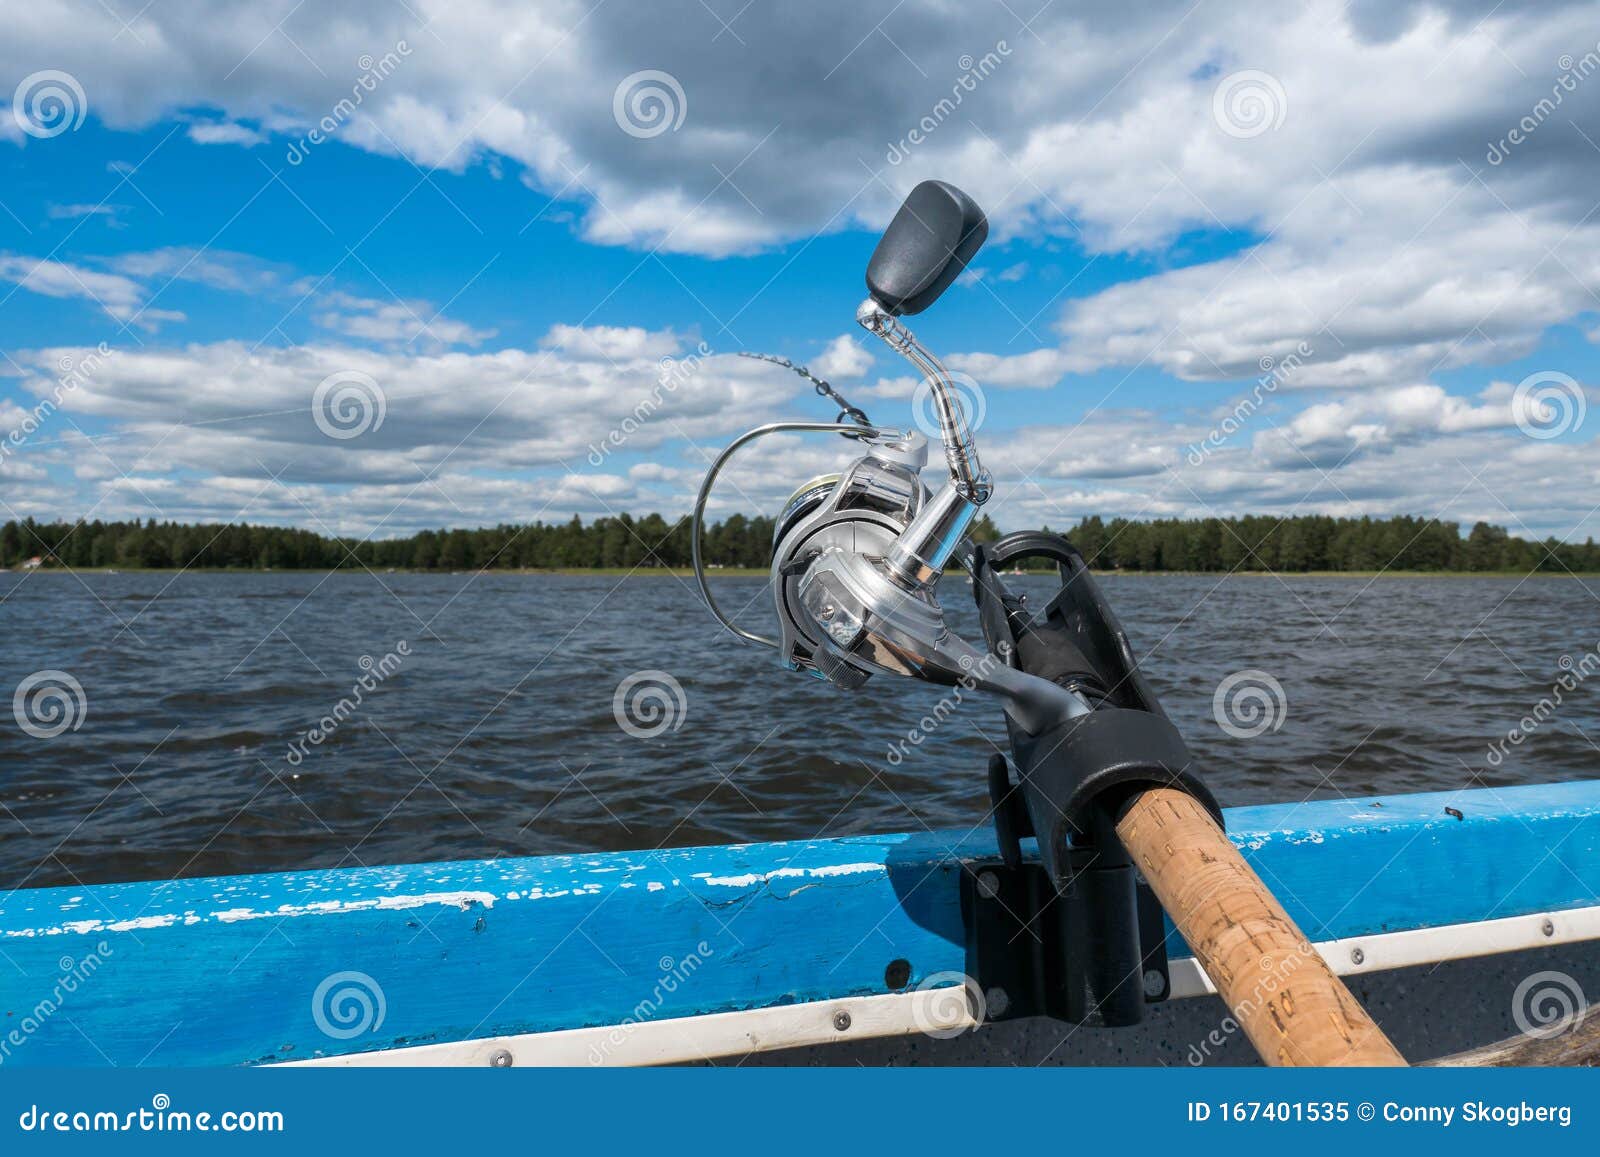 https://thumbs.dreamstime.com/z/rod-reel-boat-railing-trolling-lake-fish-blue-sky-green-trees-background-167401535.jpg